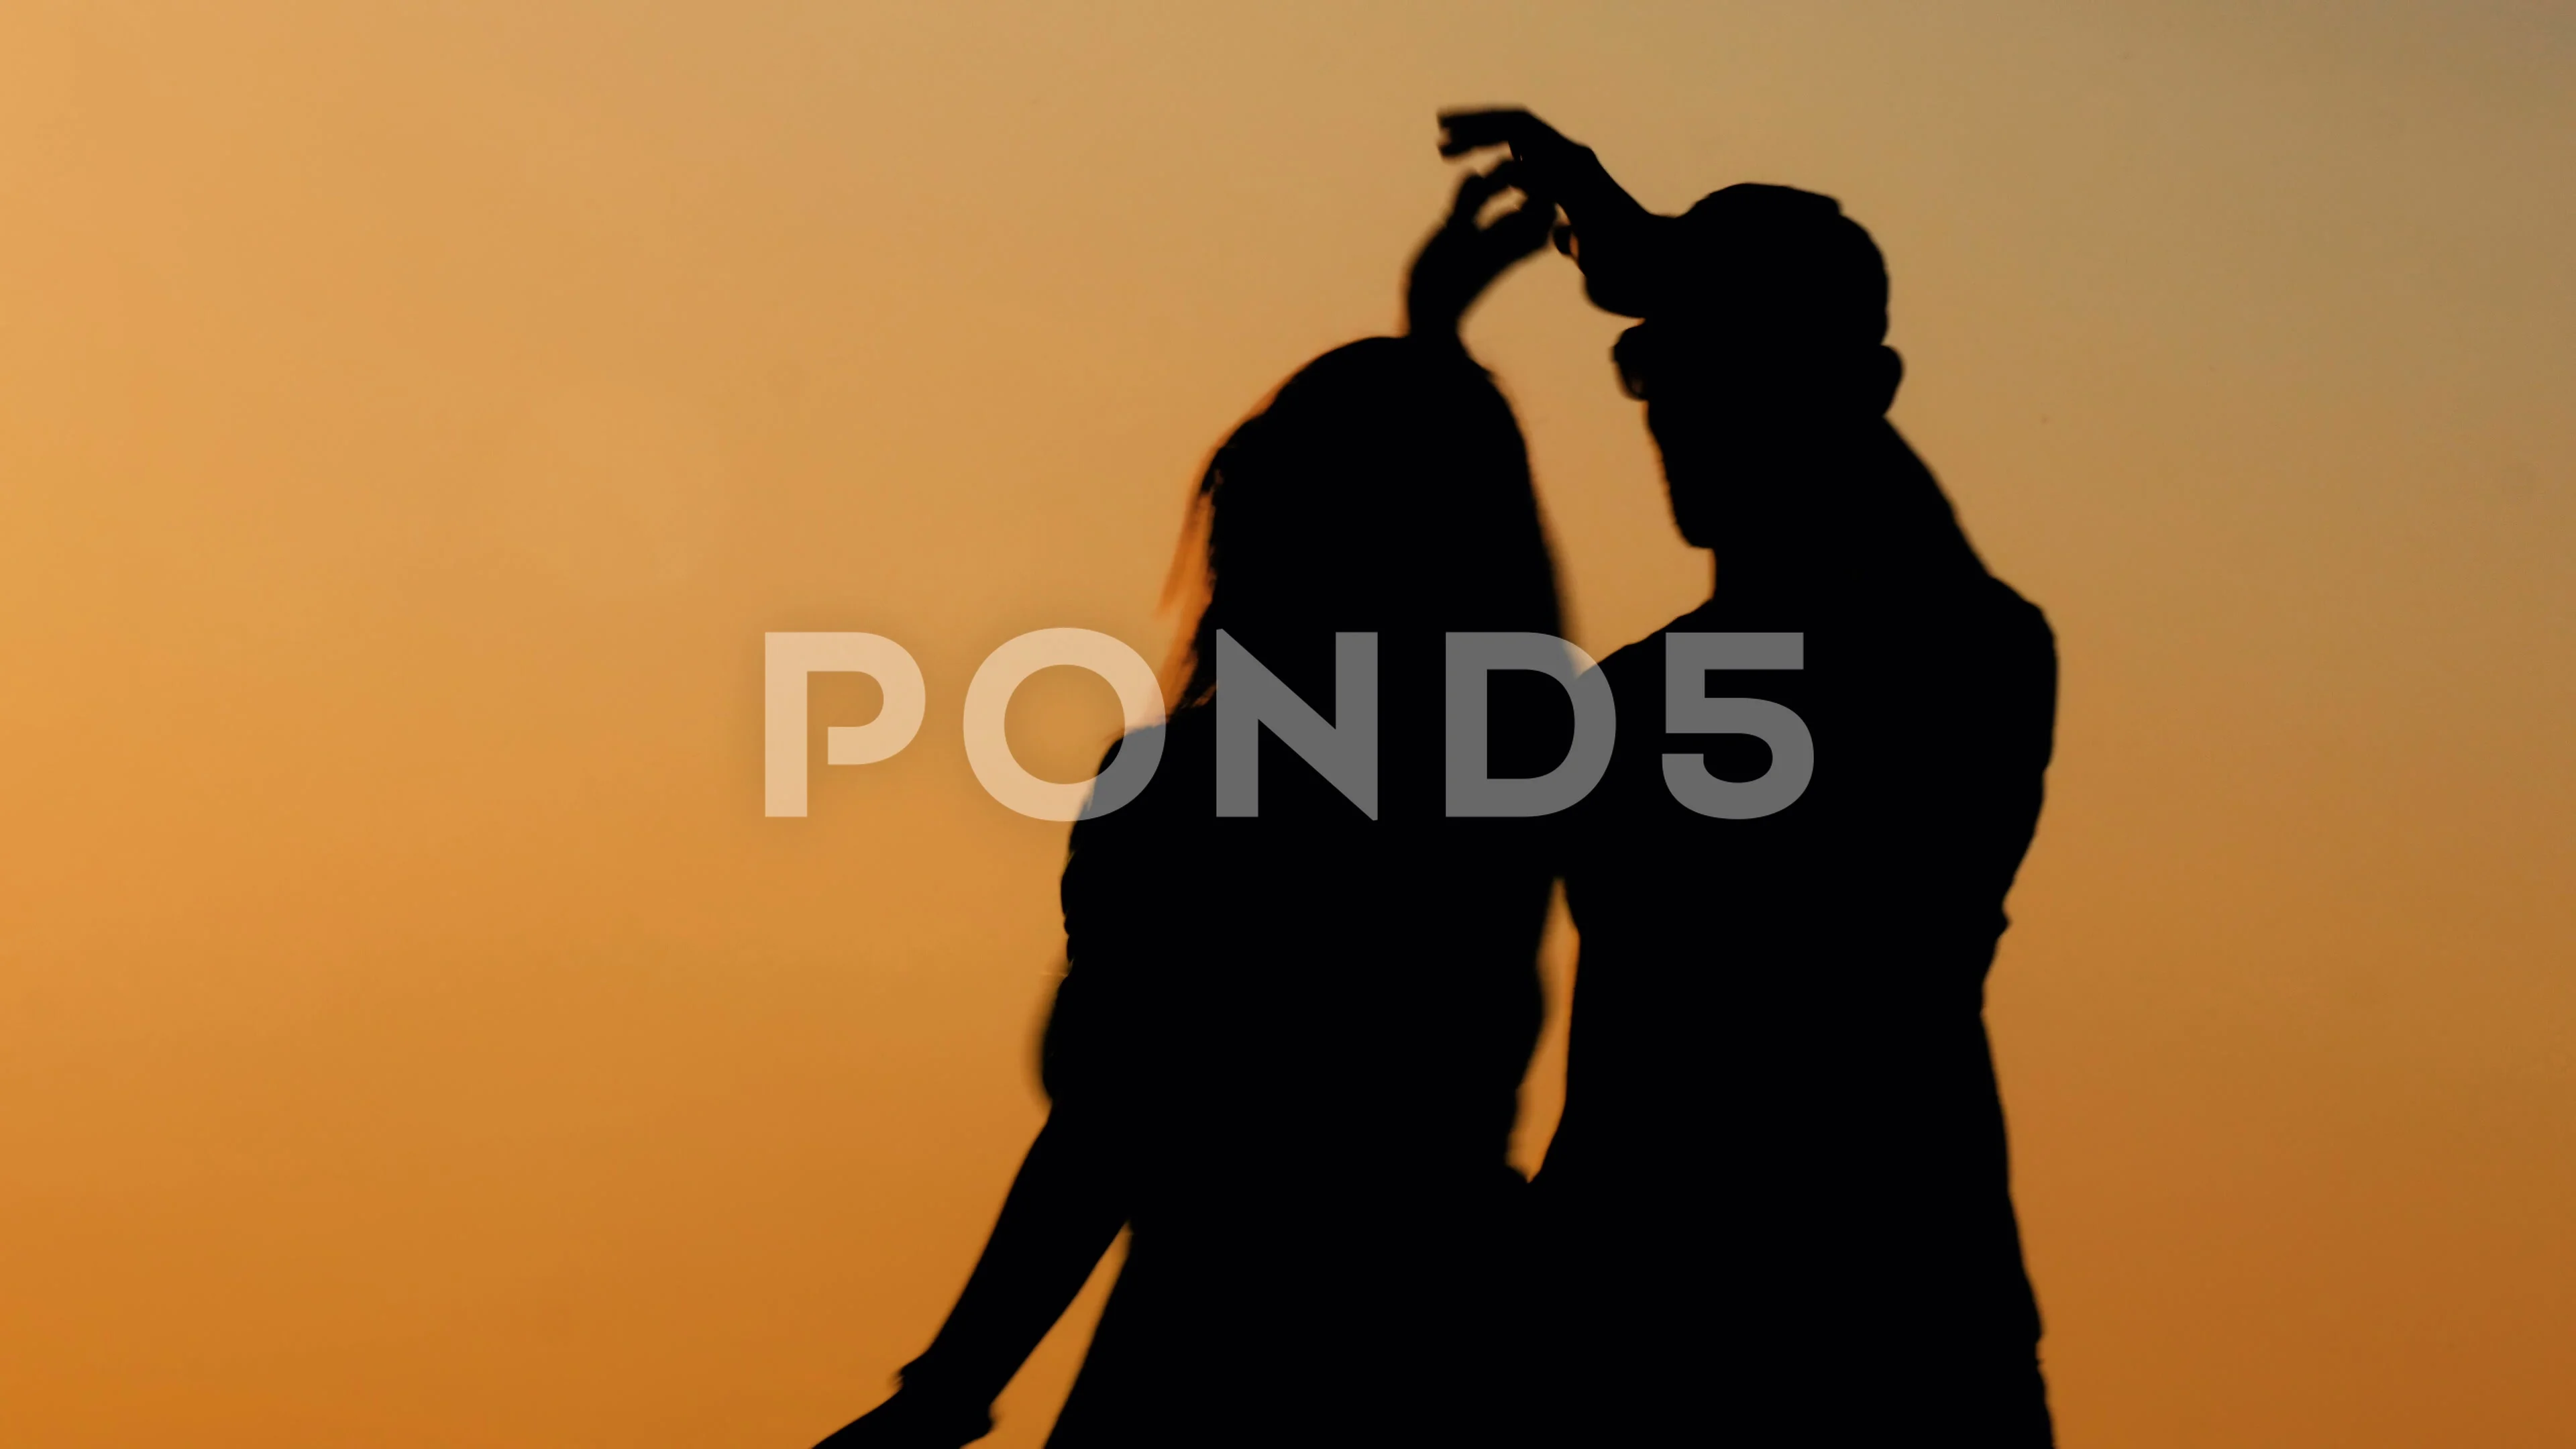 romantic couple dancing silhouette